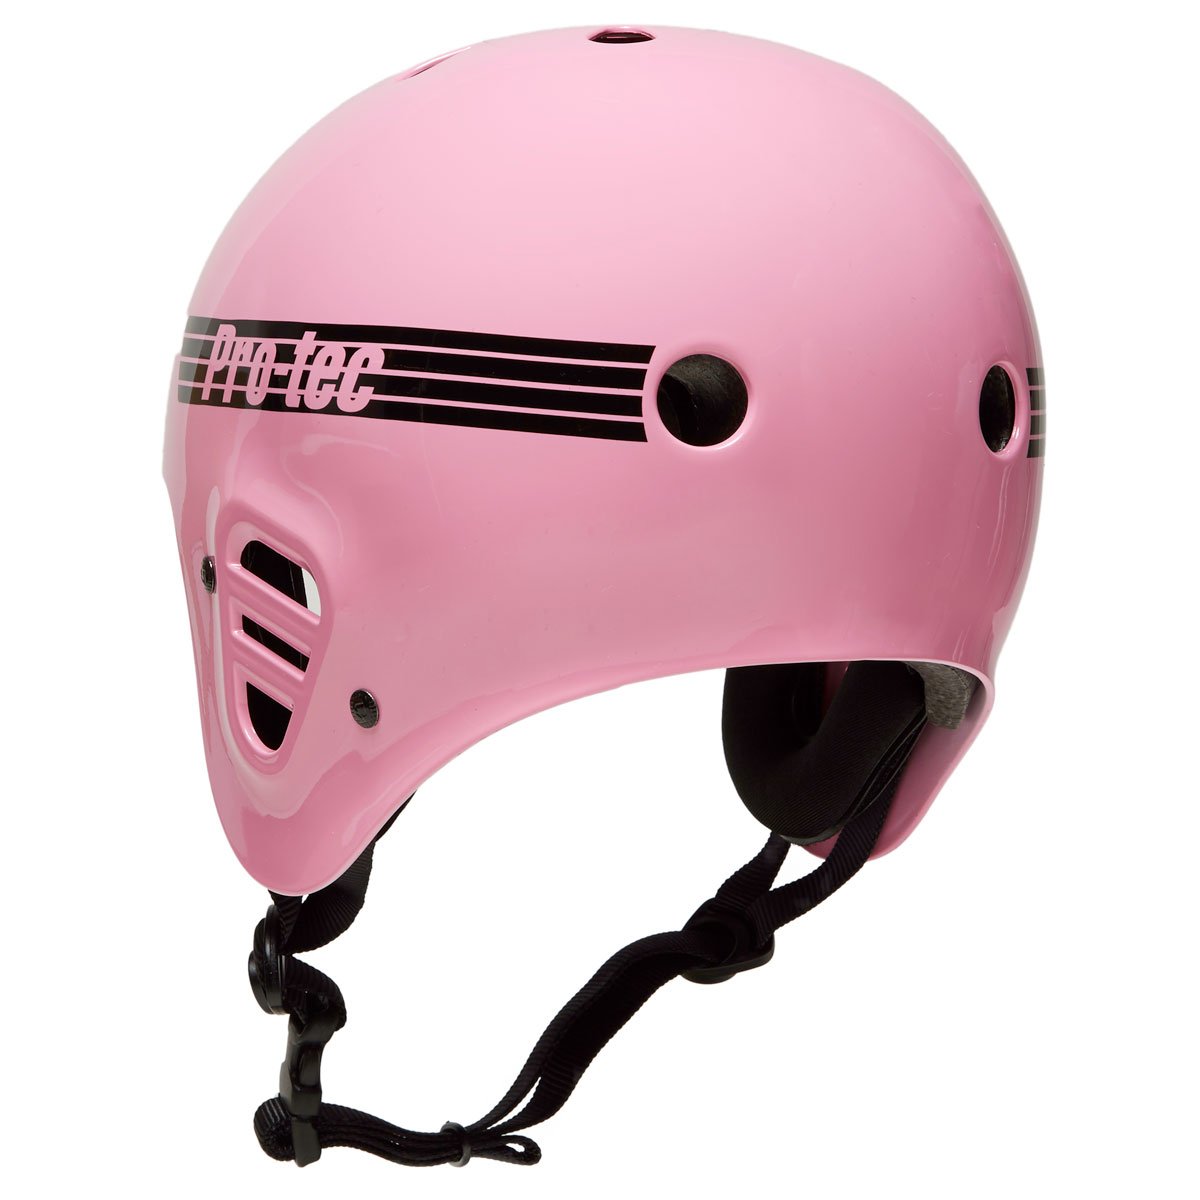 Pro-Tec Full Cut Certified Helmet - Gloss Pink image 2